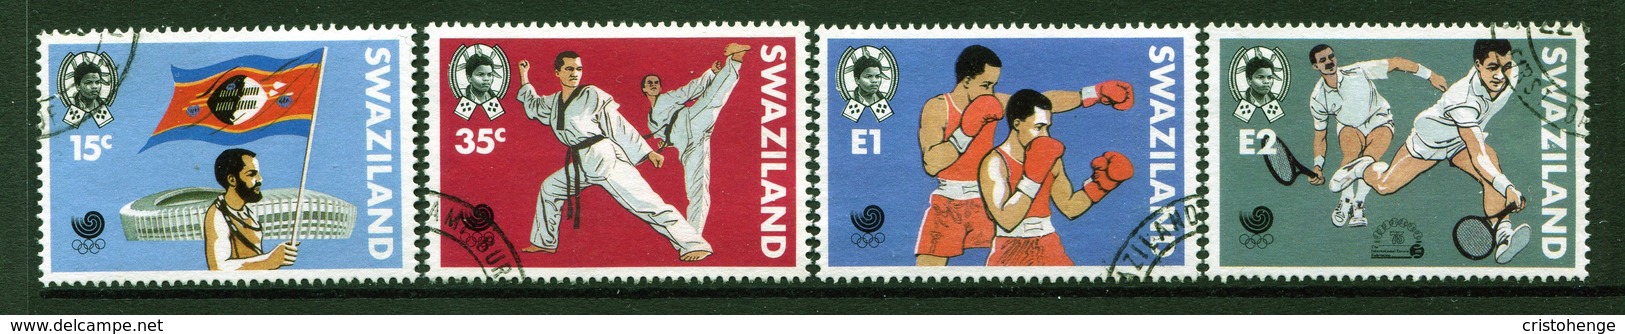 Swaziland 1988 Olympic Games, Seoul Set Used (SG 545-548) - Swaziland (1968-...)